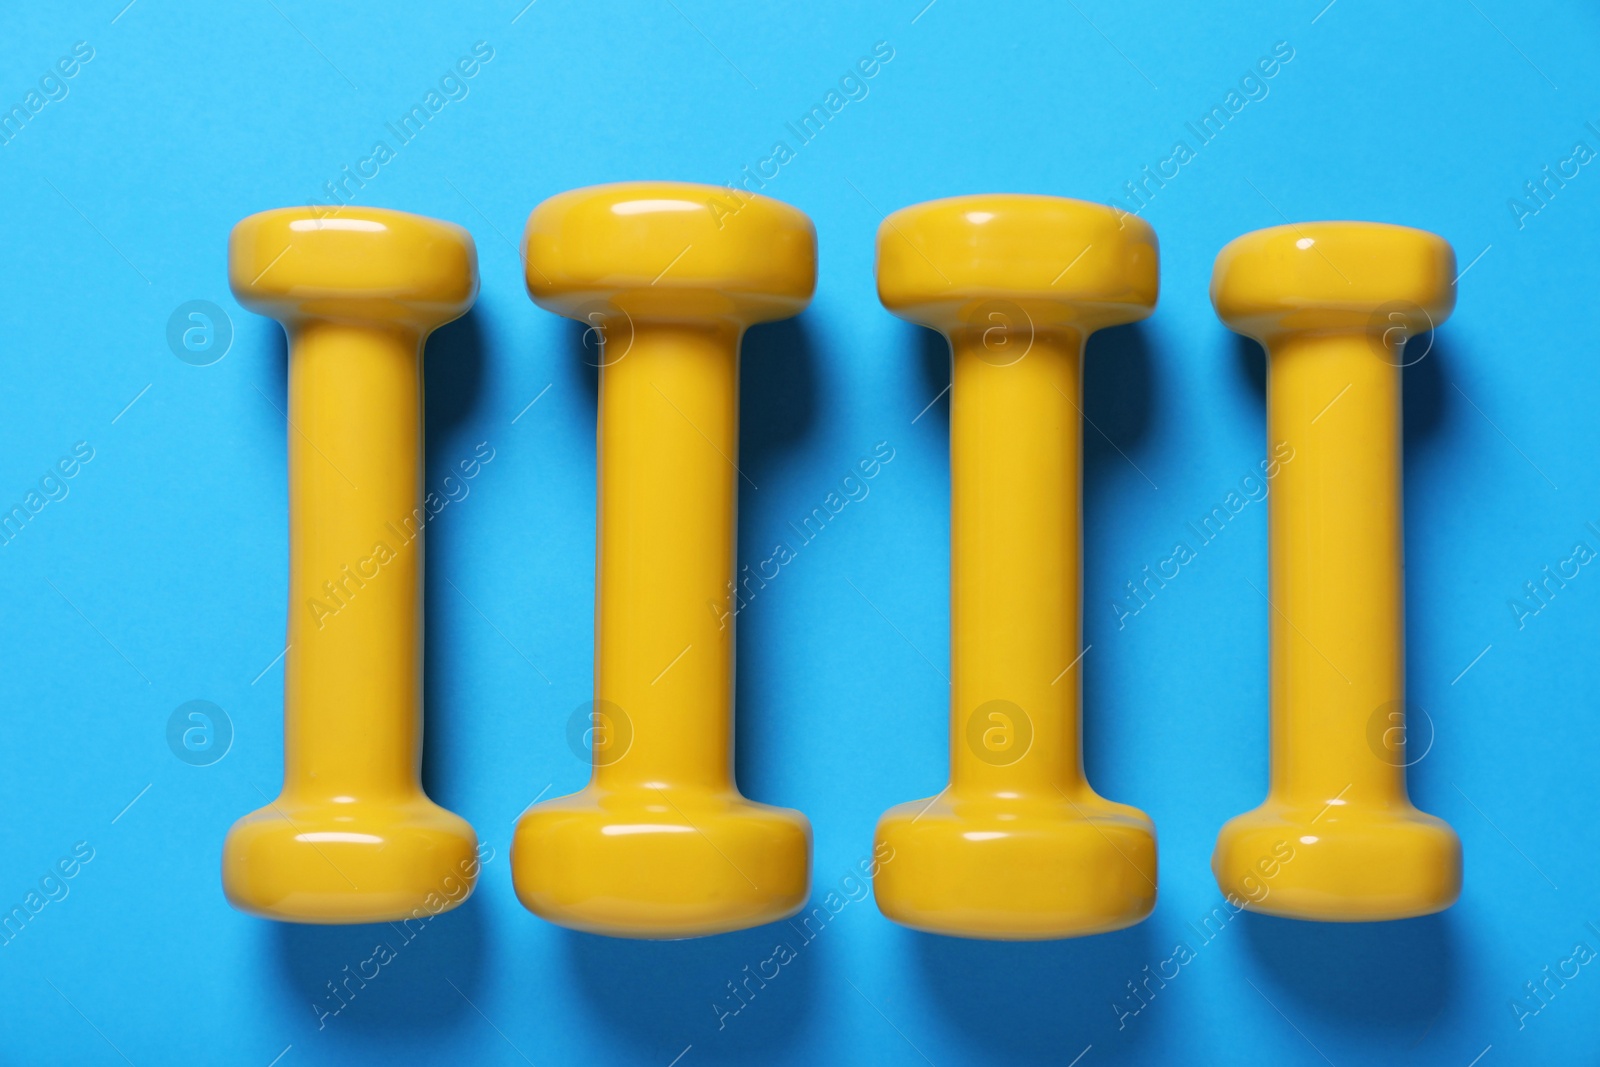 Photo of Yellow dumbbells on light blue background, flat lay. Morning exercise